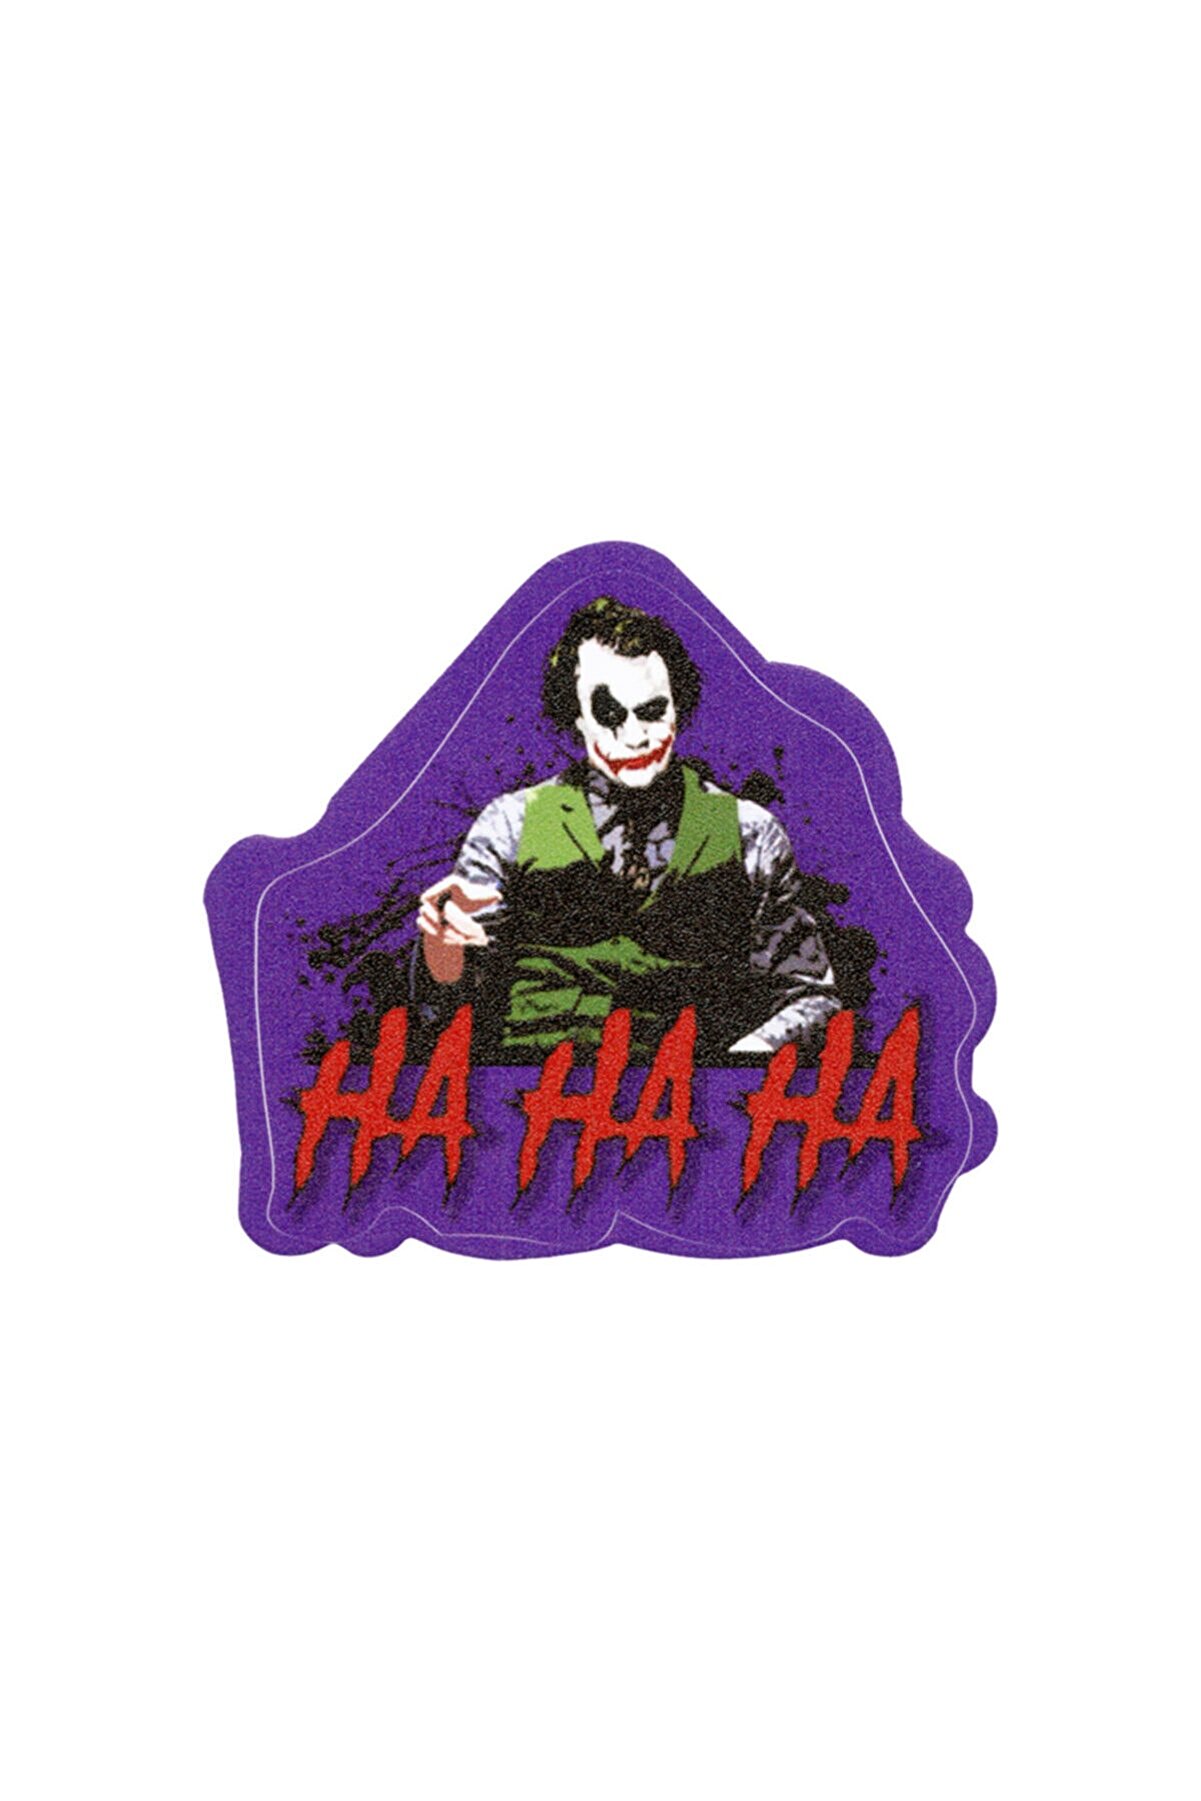 Joker Özel Kesim Sticker Seti